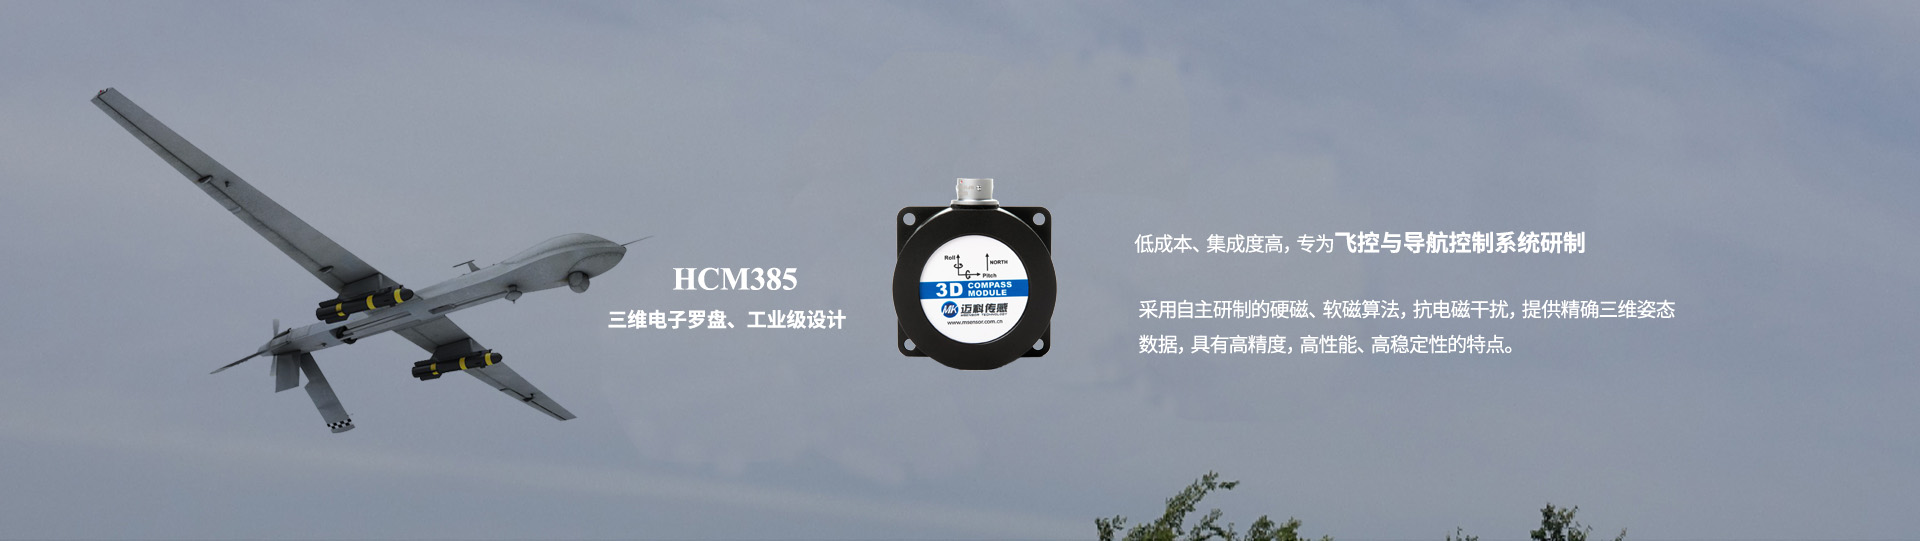 HCM385三維電子羅盤飛控與導航控制